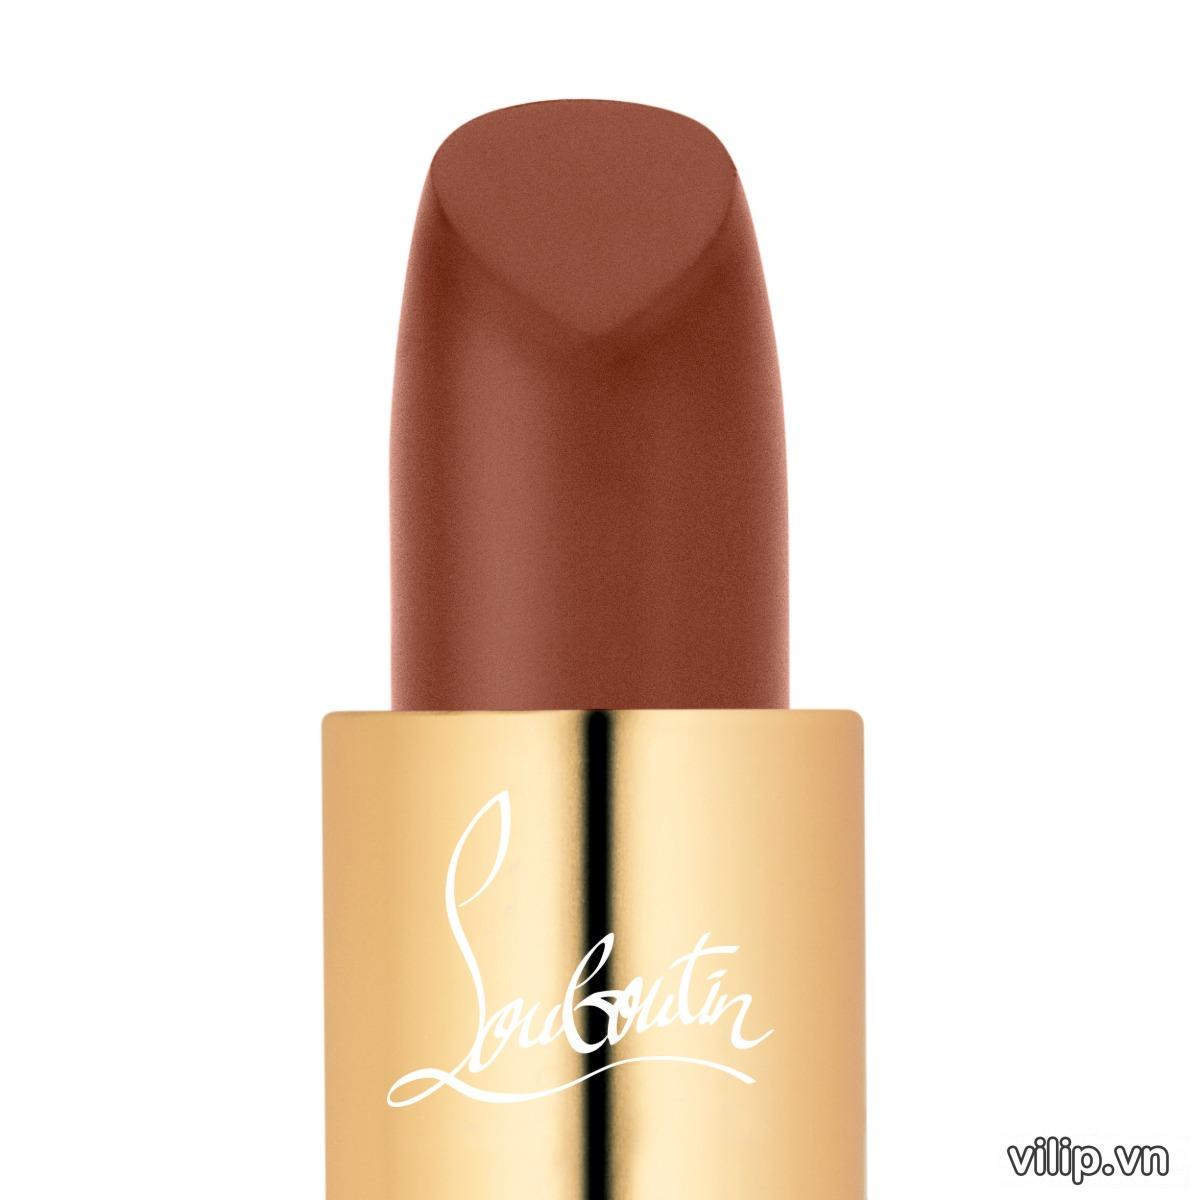 Son Christian Louboutin Beauty Velvet Matte Lip Colour 342m Milky Light (new) Màu Cam Nâu Đất 5